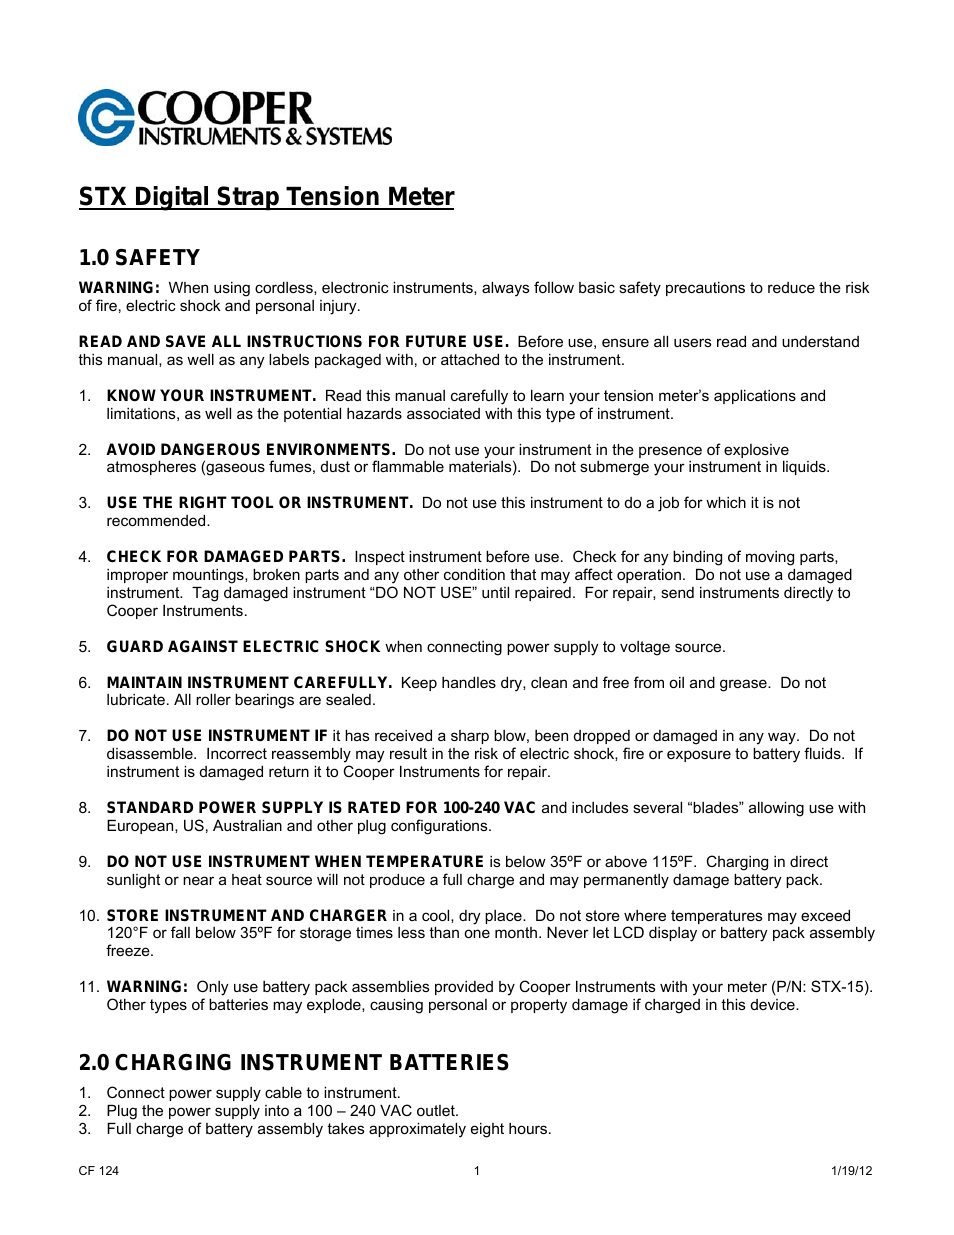 STX-1 Digital Strap Tension Meter